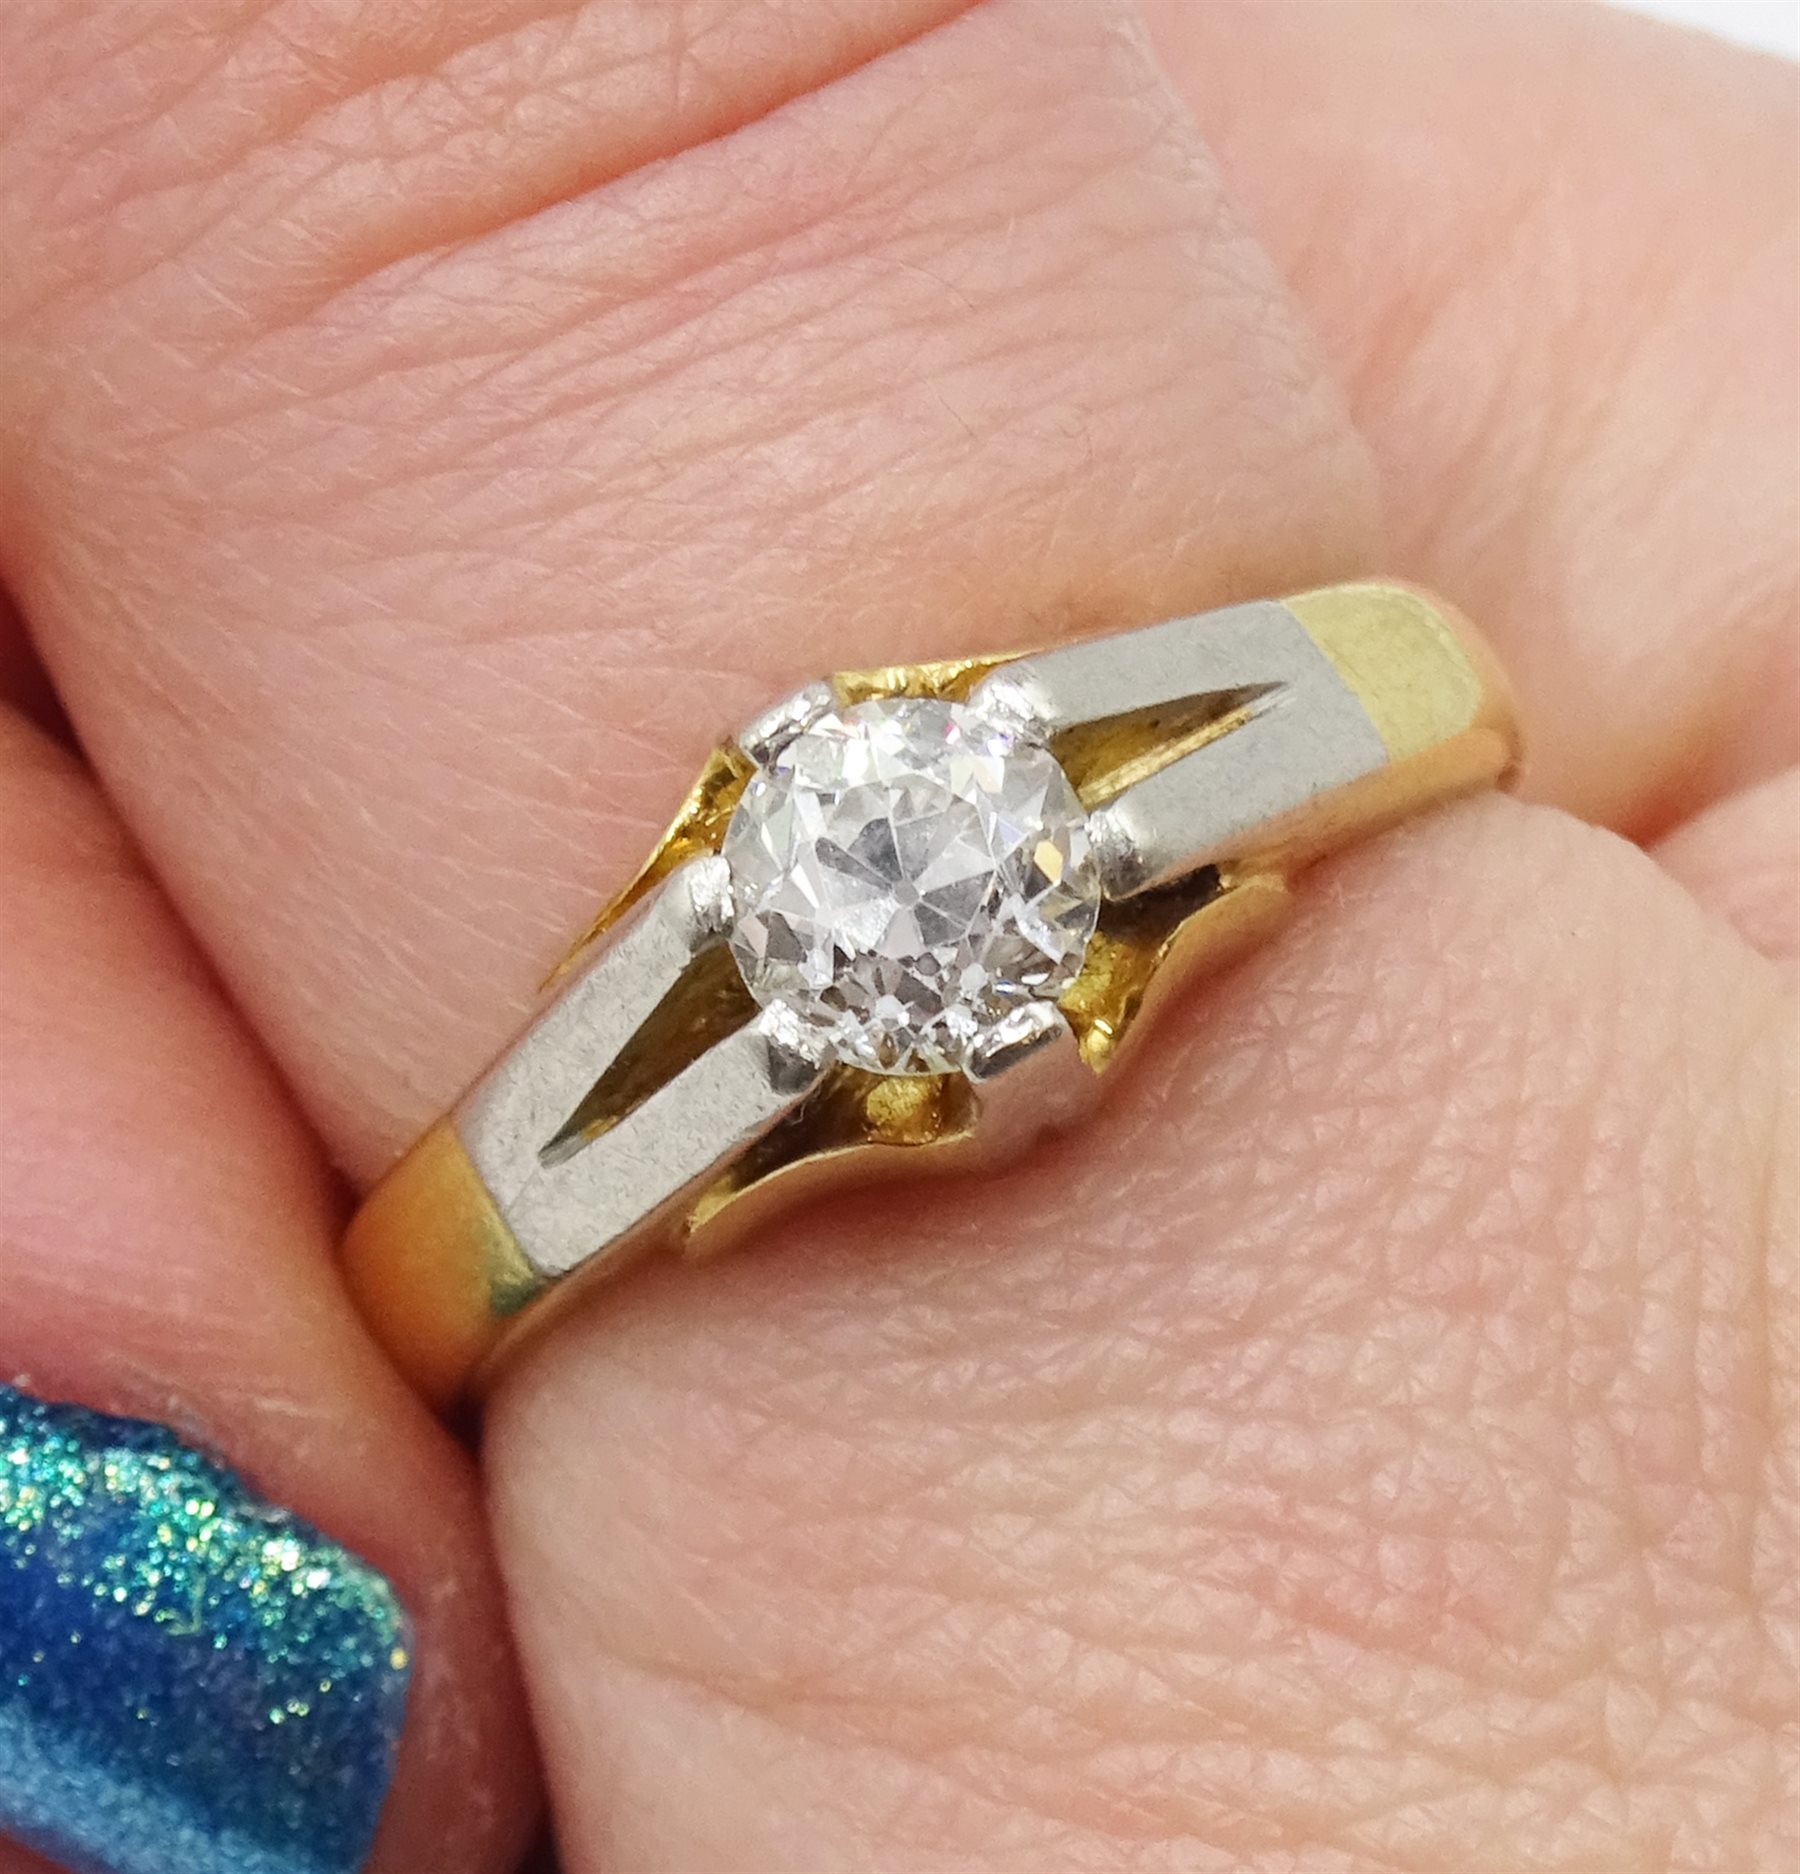 Gold gentleman's single stone diamond ring, stamped 18ct Plat, diamond approx 0.60 carat - Image 2 of 4